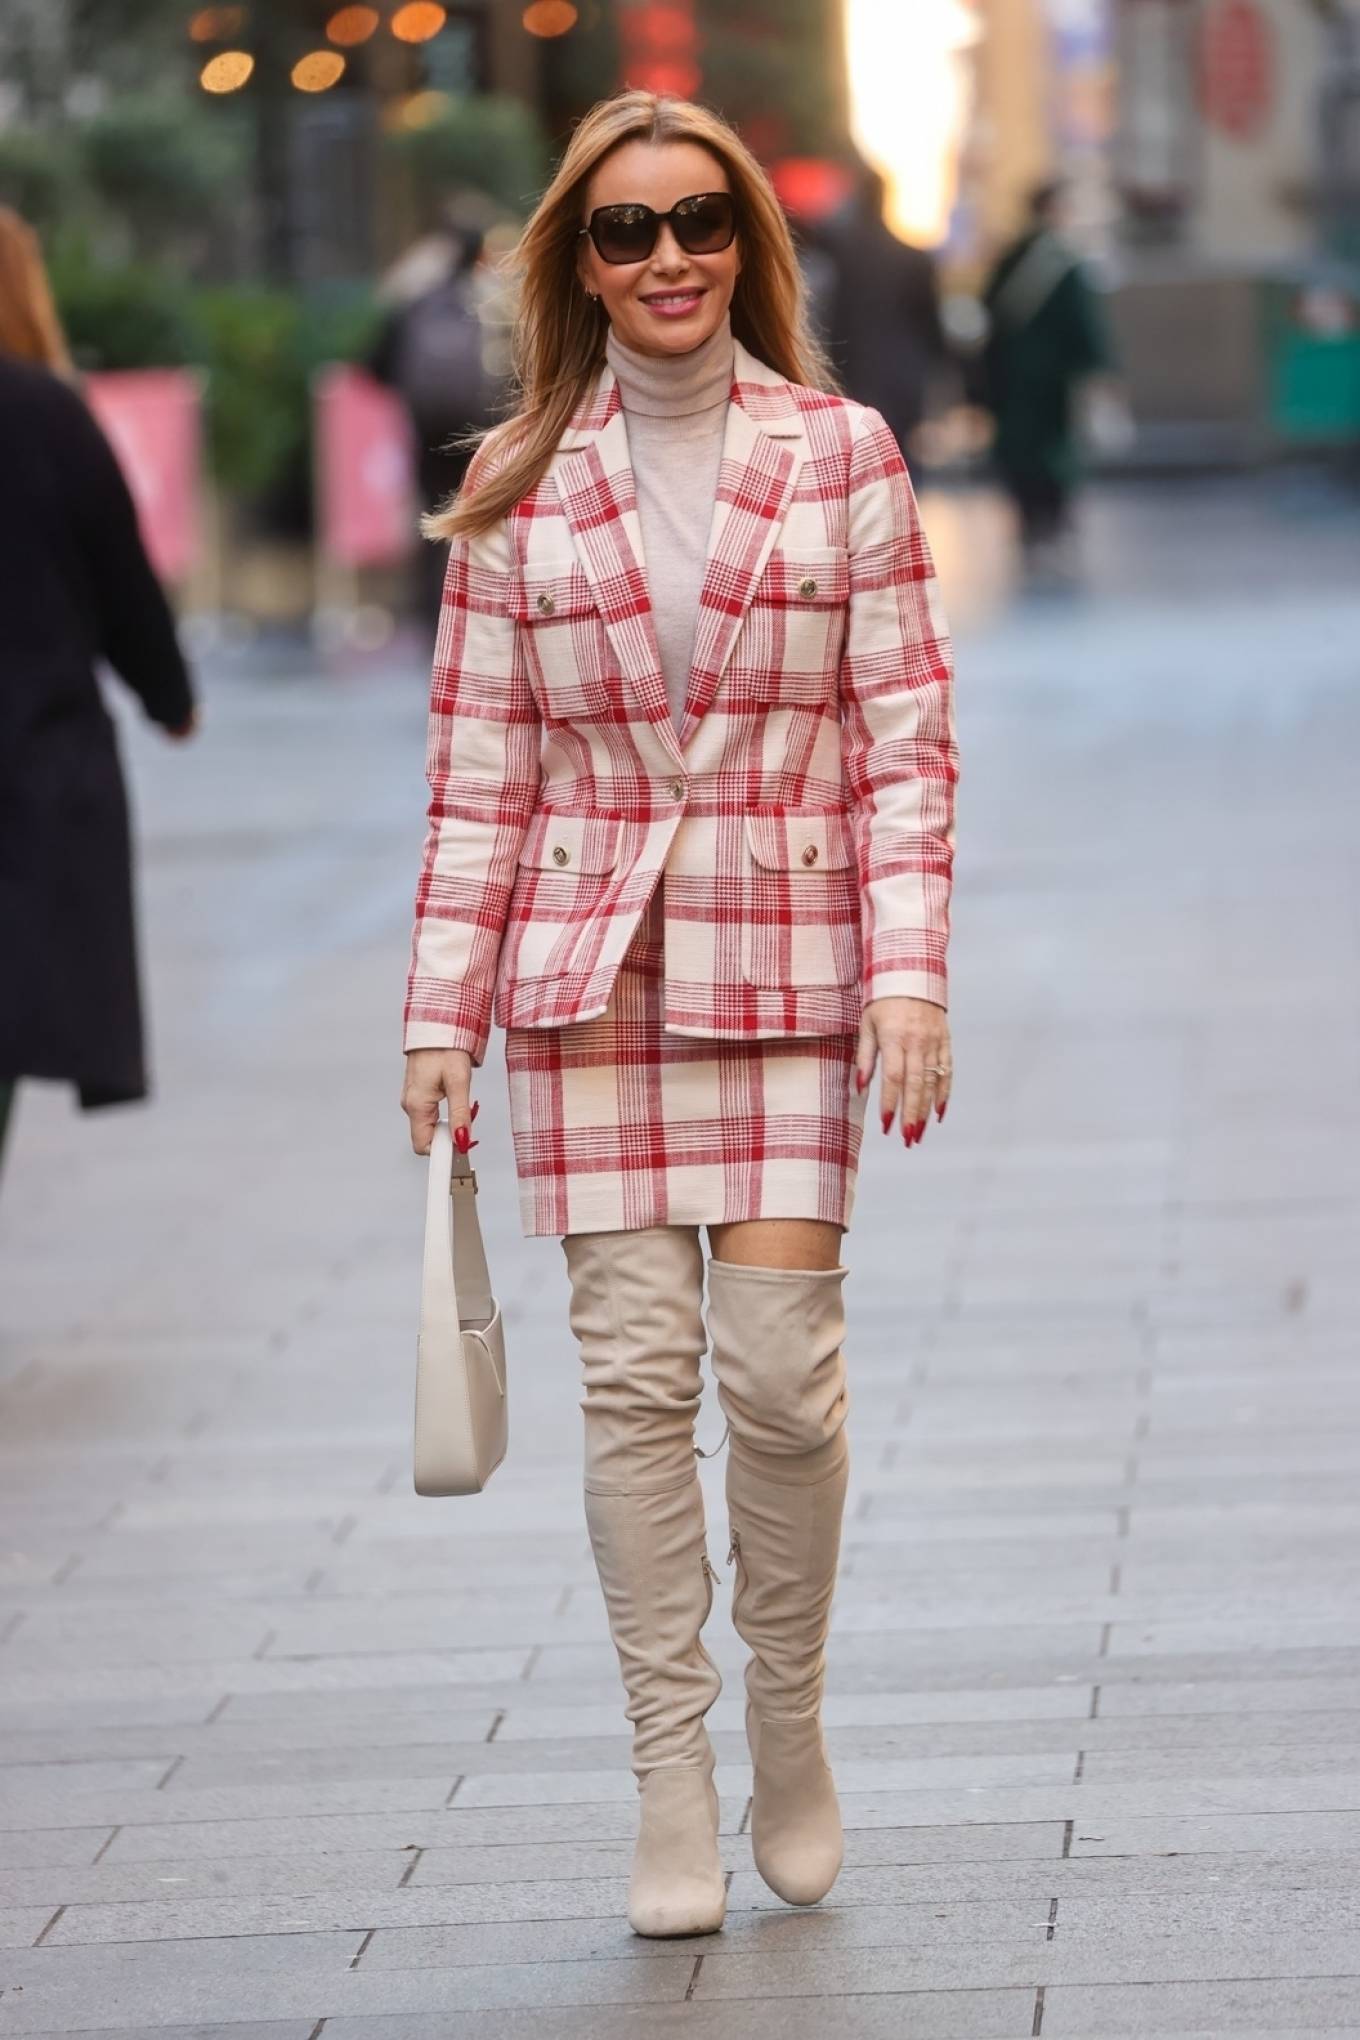 Amanda Holden 2022 : Amanda Holden – In a gingham mini skirt for Heart radio appearance in London-15